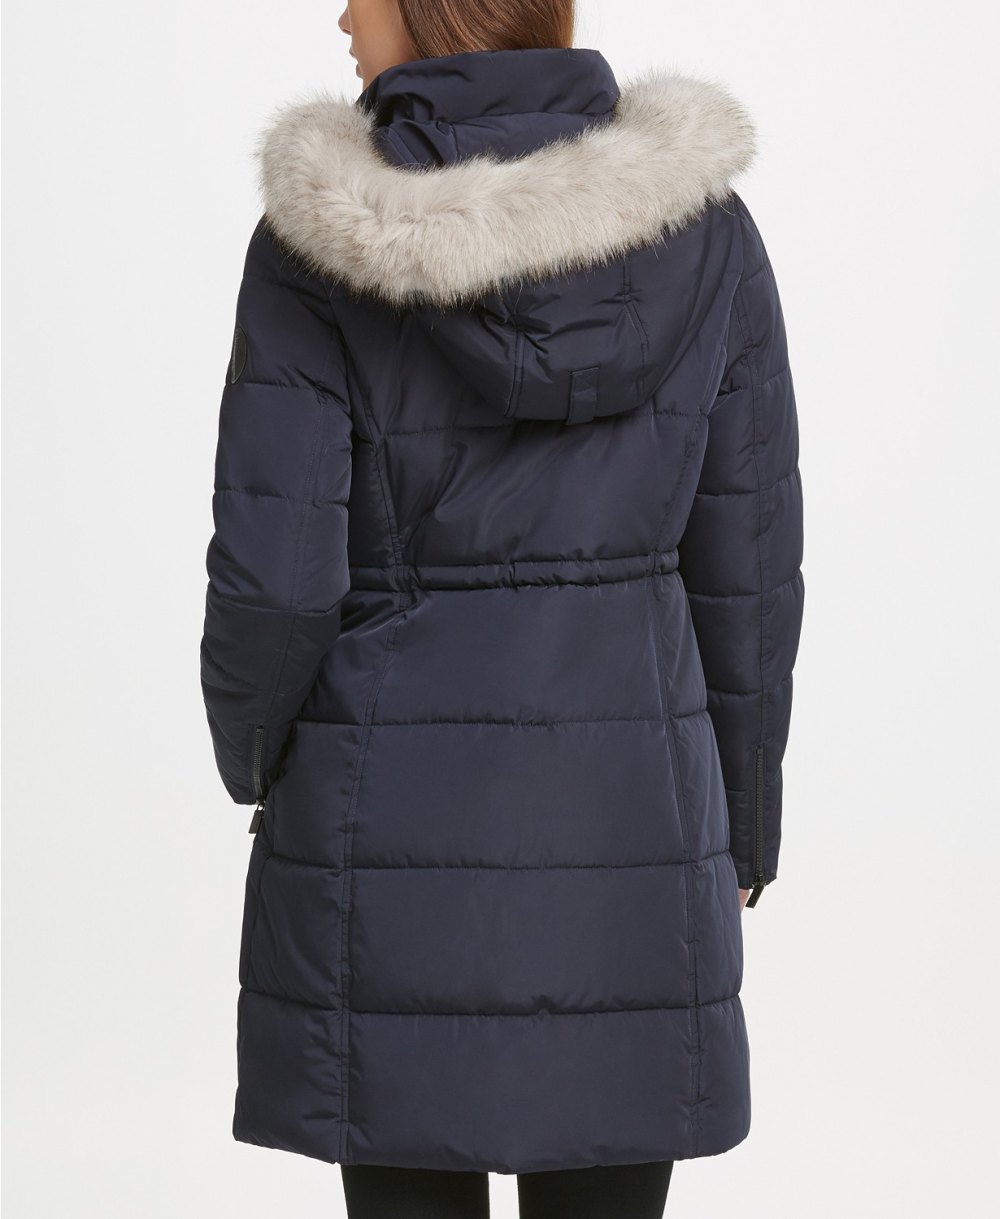 DKNY Faux-Fur-Trim Hooded Puffer Coat (Navy)